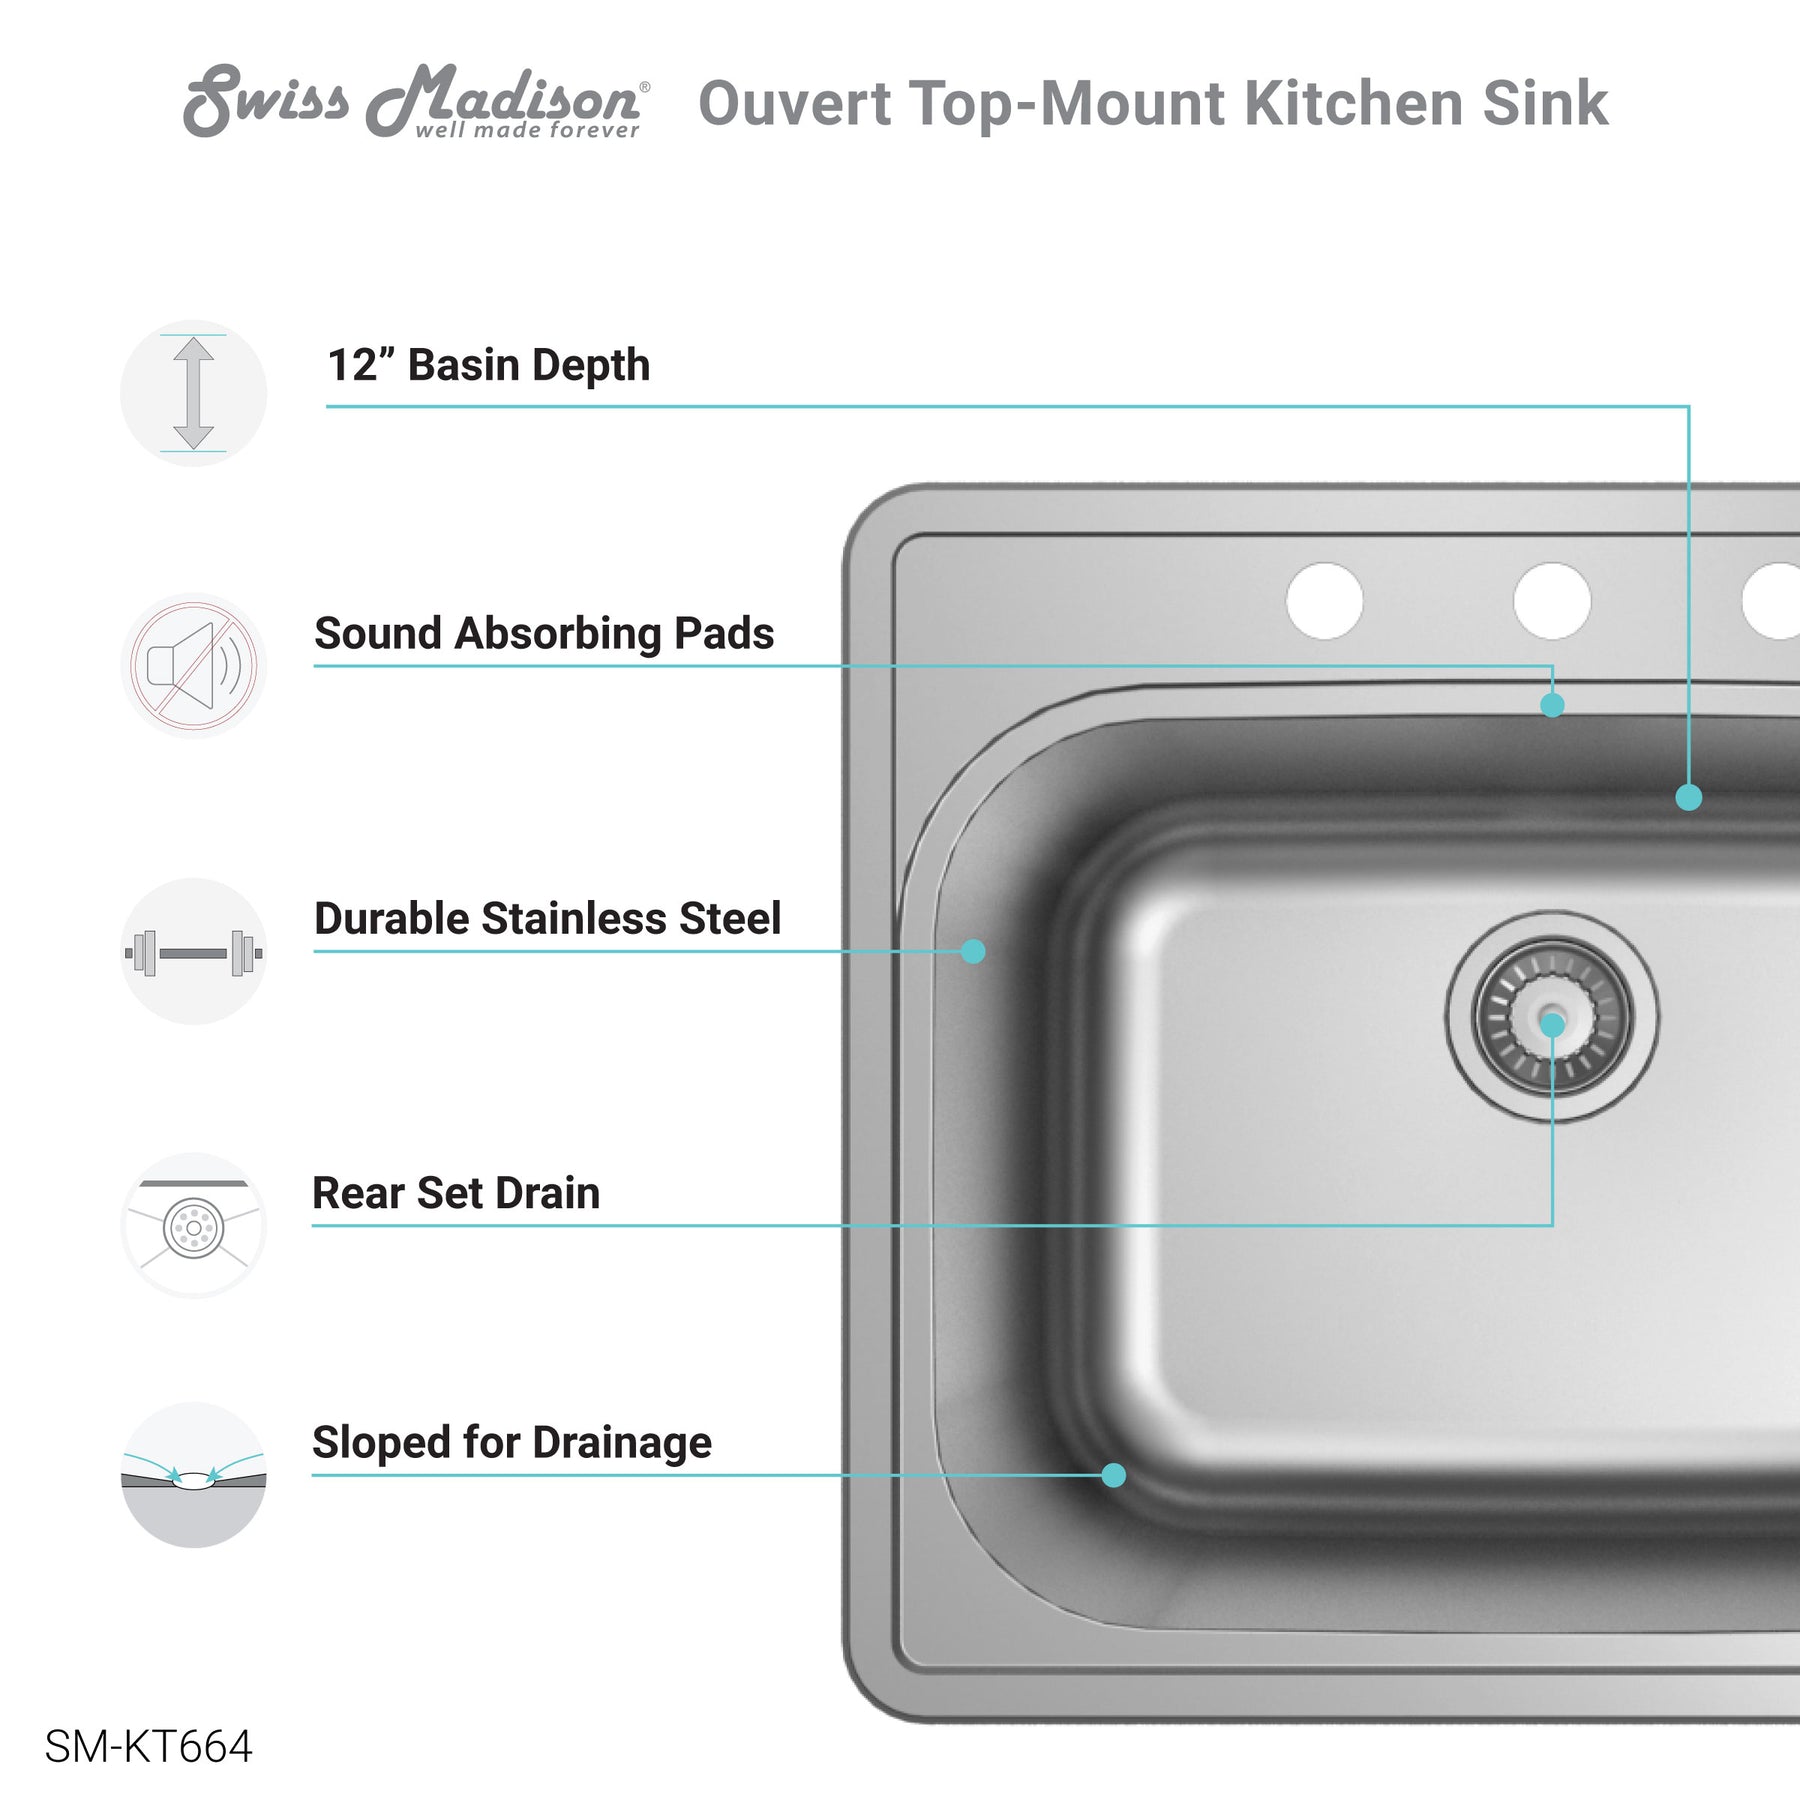 Swiss Madison Ouvert 25 x 22 Single Basin, Top-Mount Kitchen Sink - SM-KT664